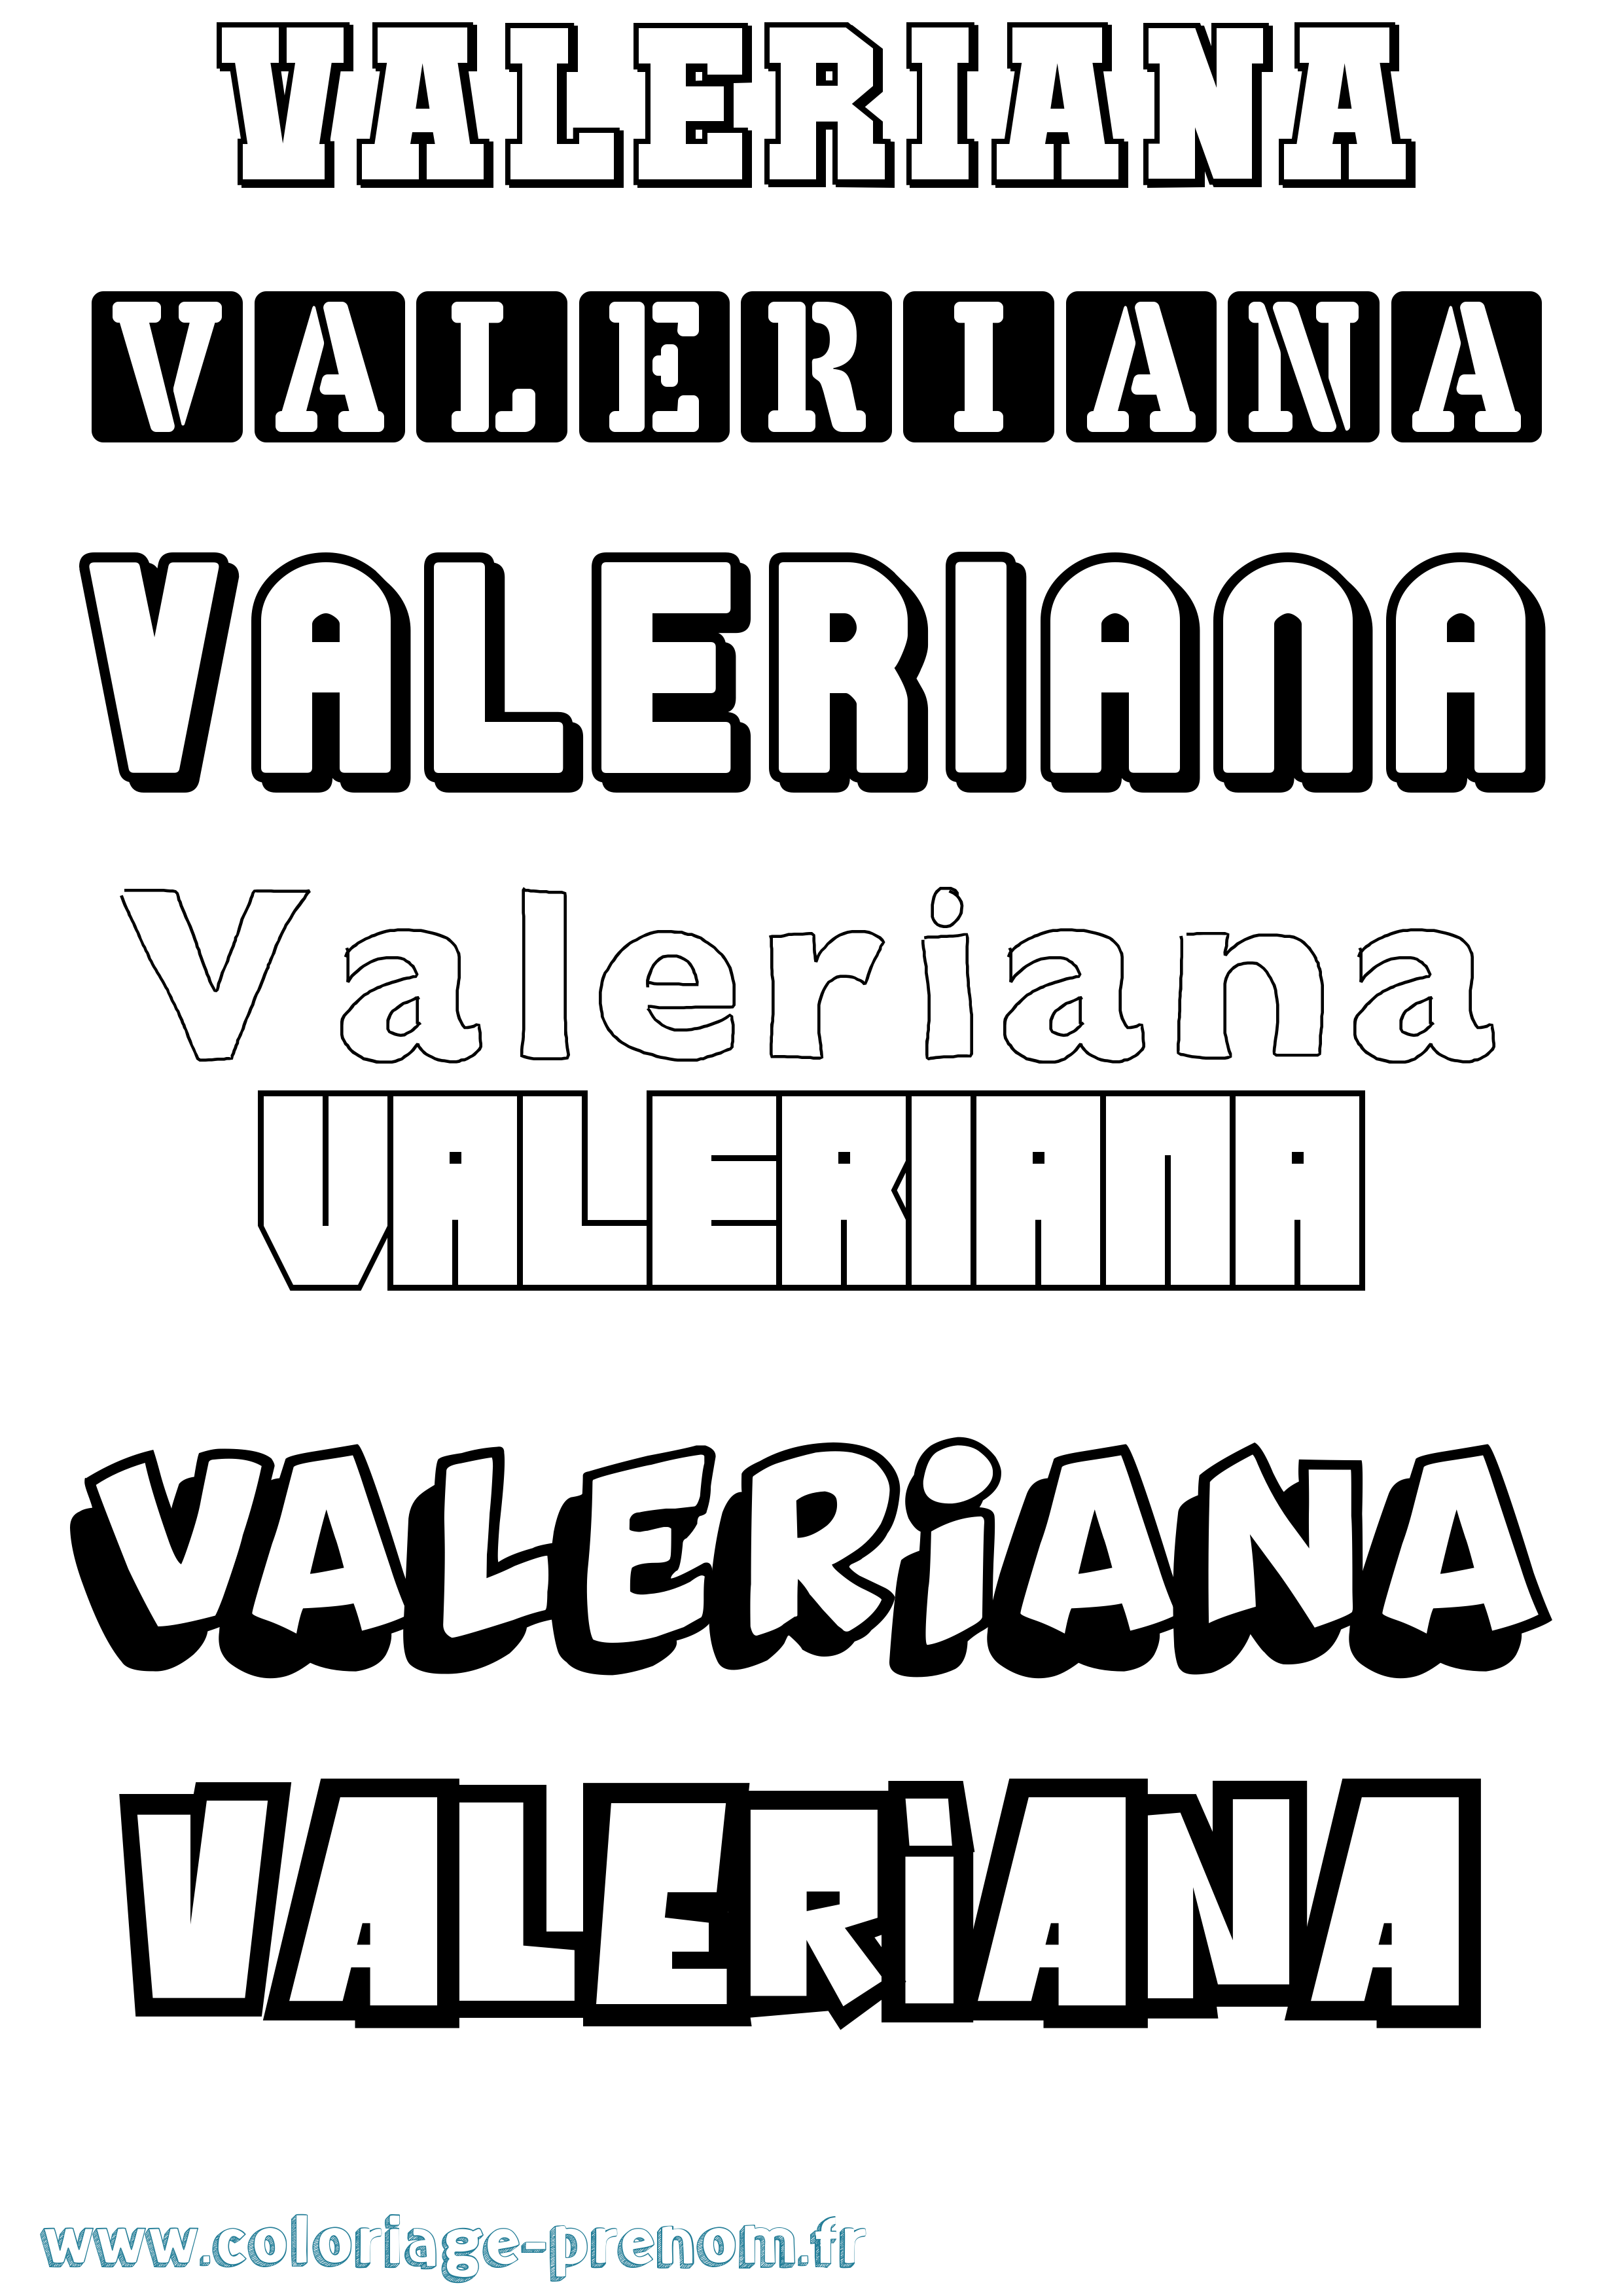 Coloriage prénom Valeriana Simple